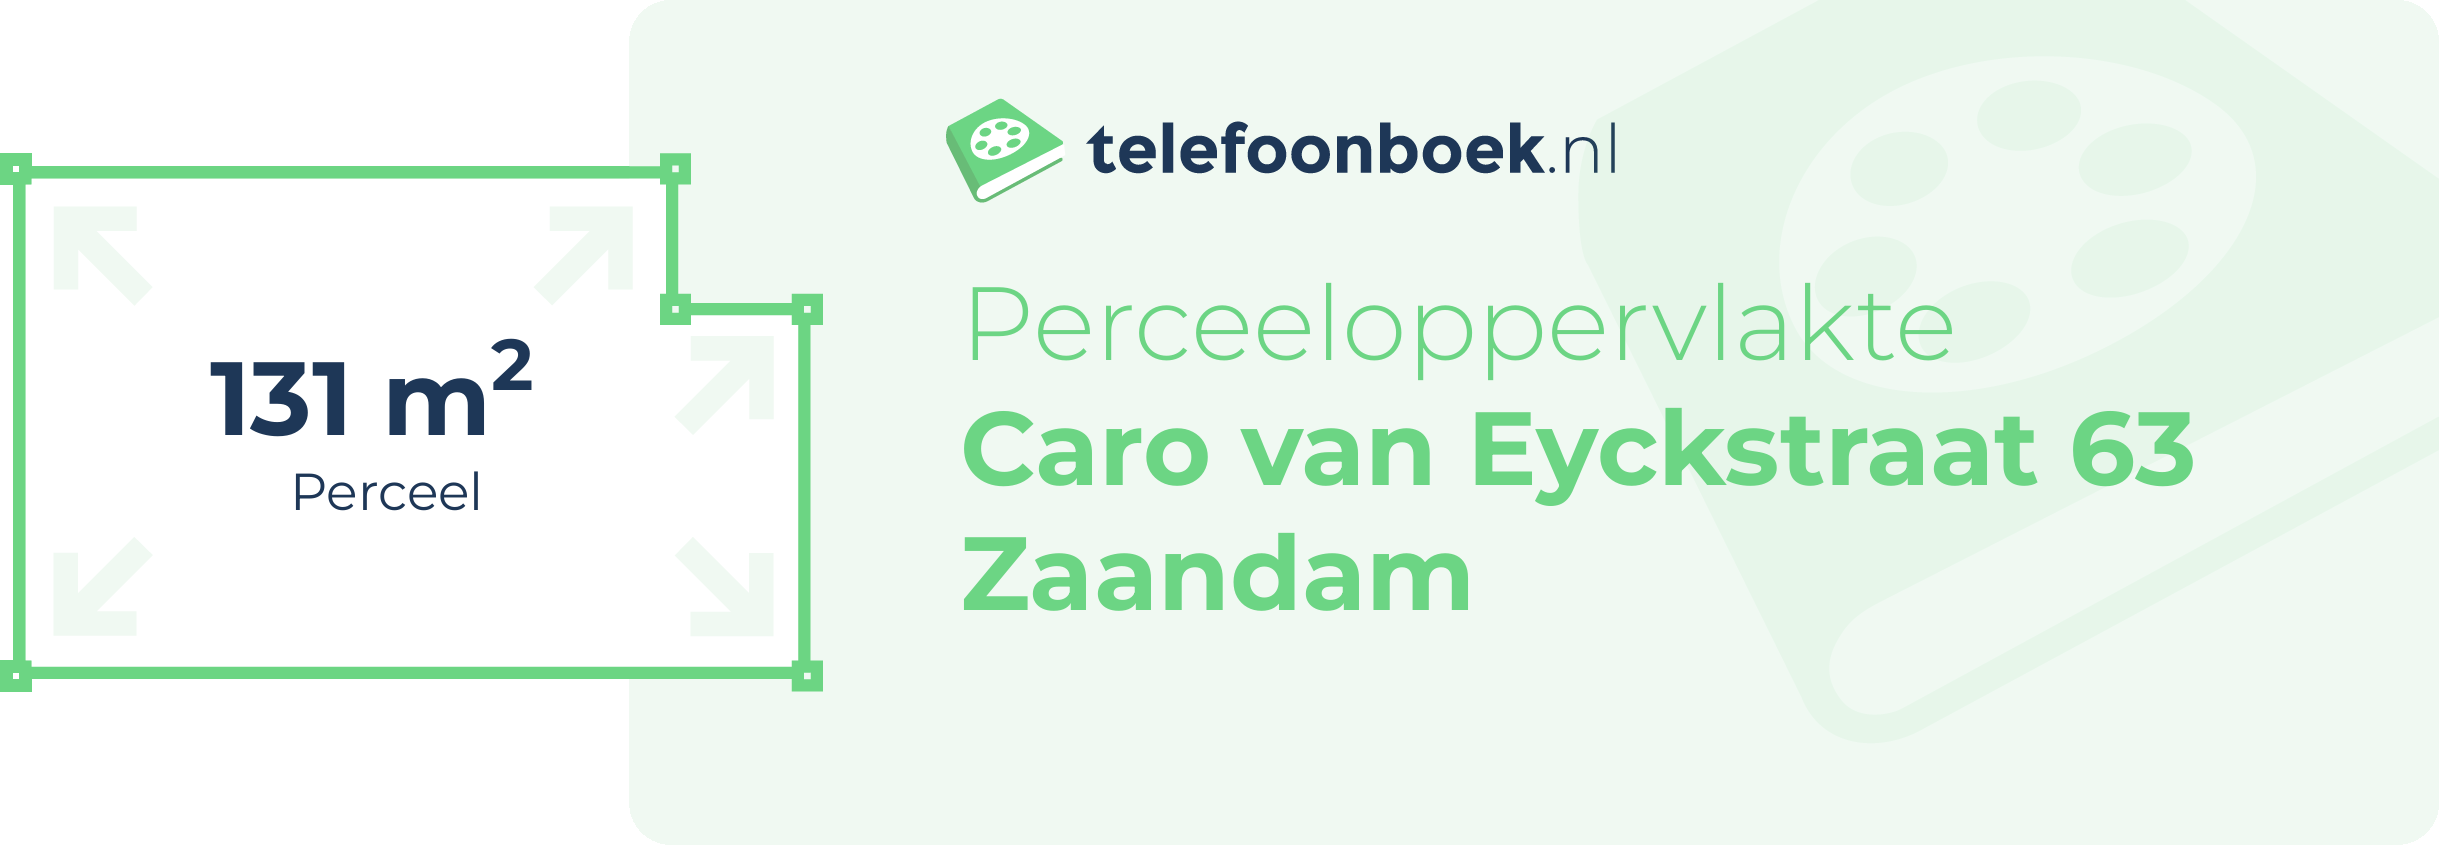 Perceeloppervlakte Caro Van Eyckstraat 63 Zaandam